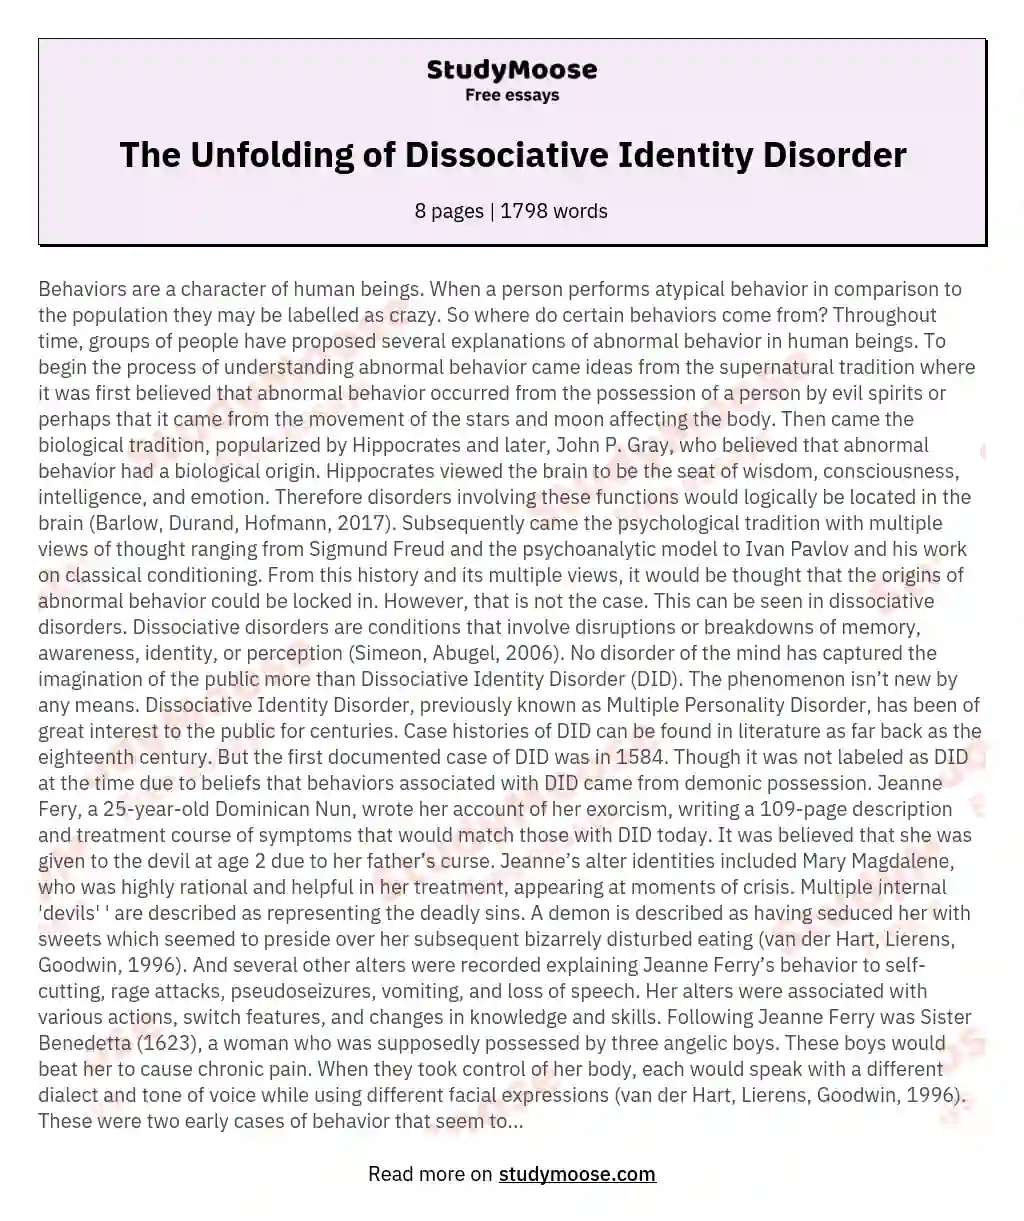 The Unfolding of Dissociative Identity Disorder essay